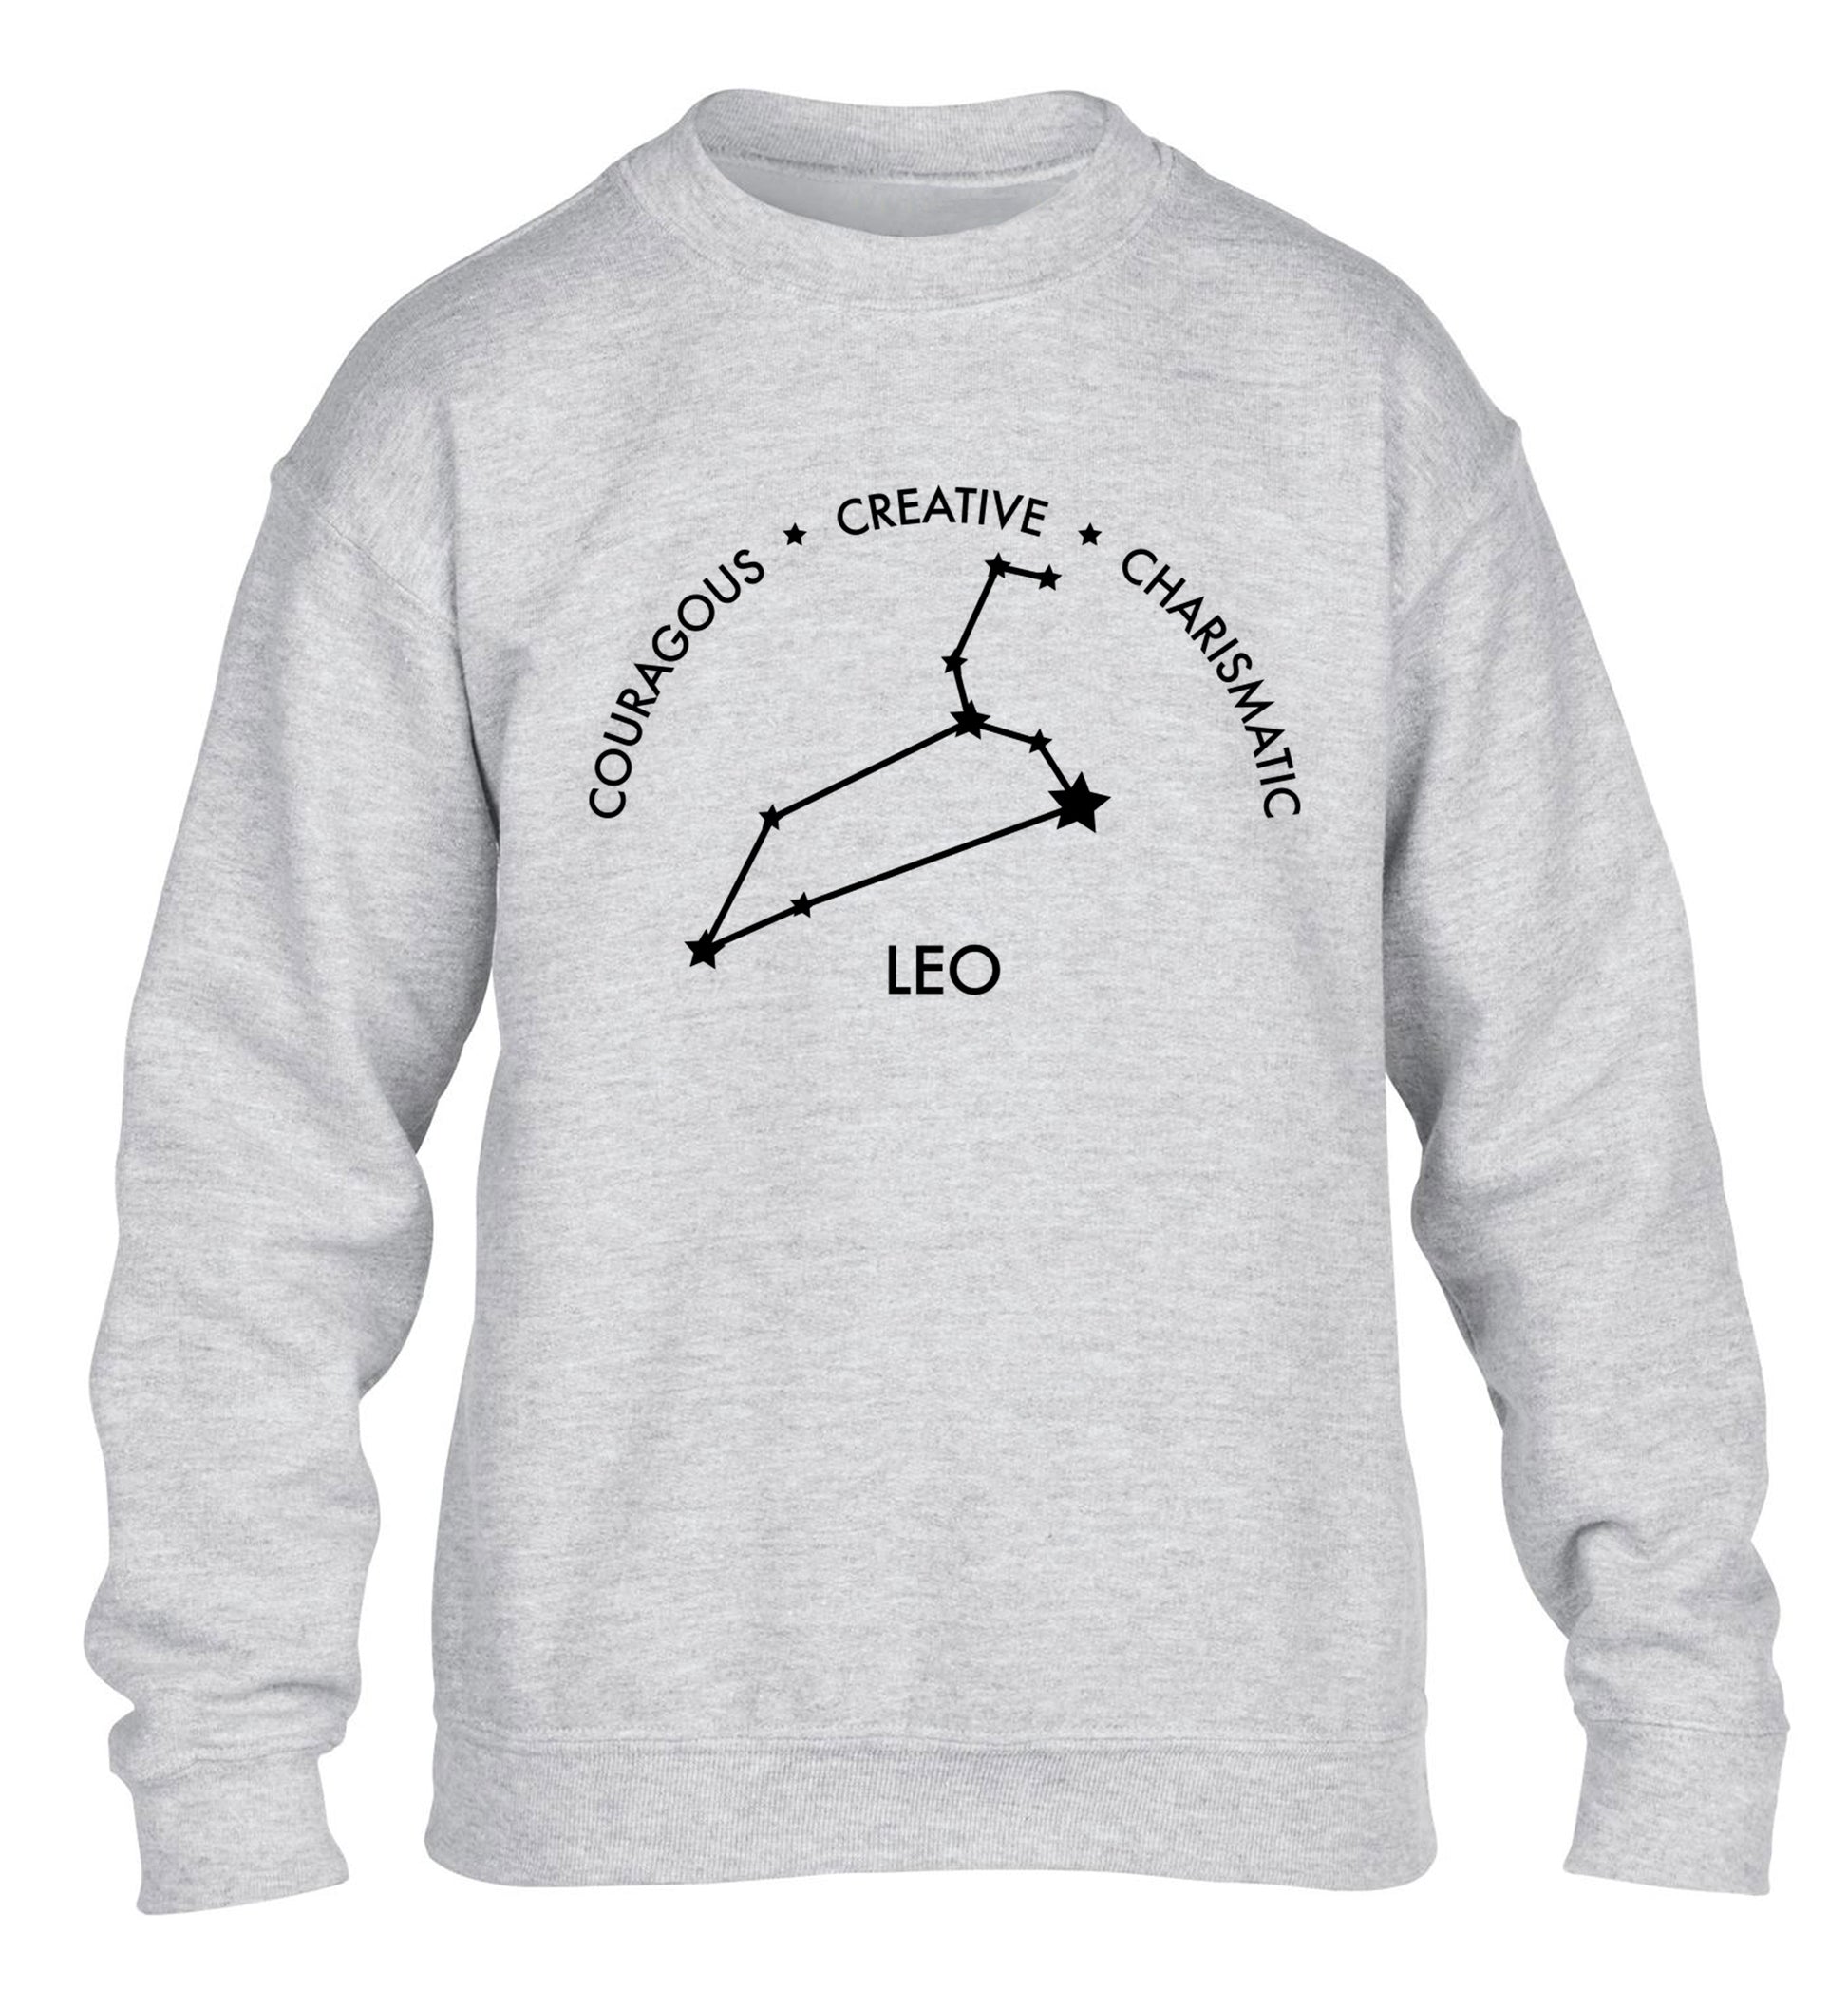 Leo - Courageous | Creative | Charismatic children's grey sweater 12-13 Years